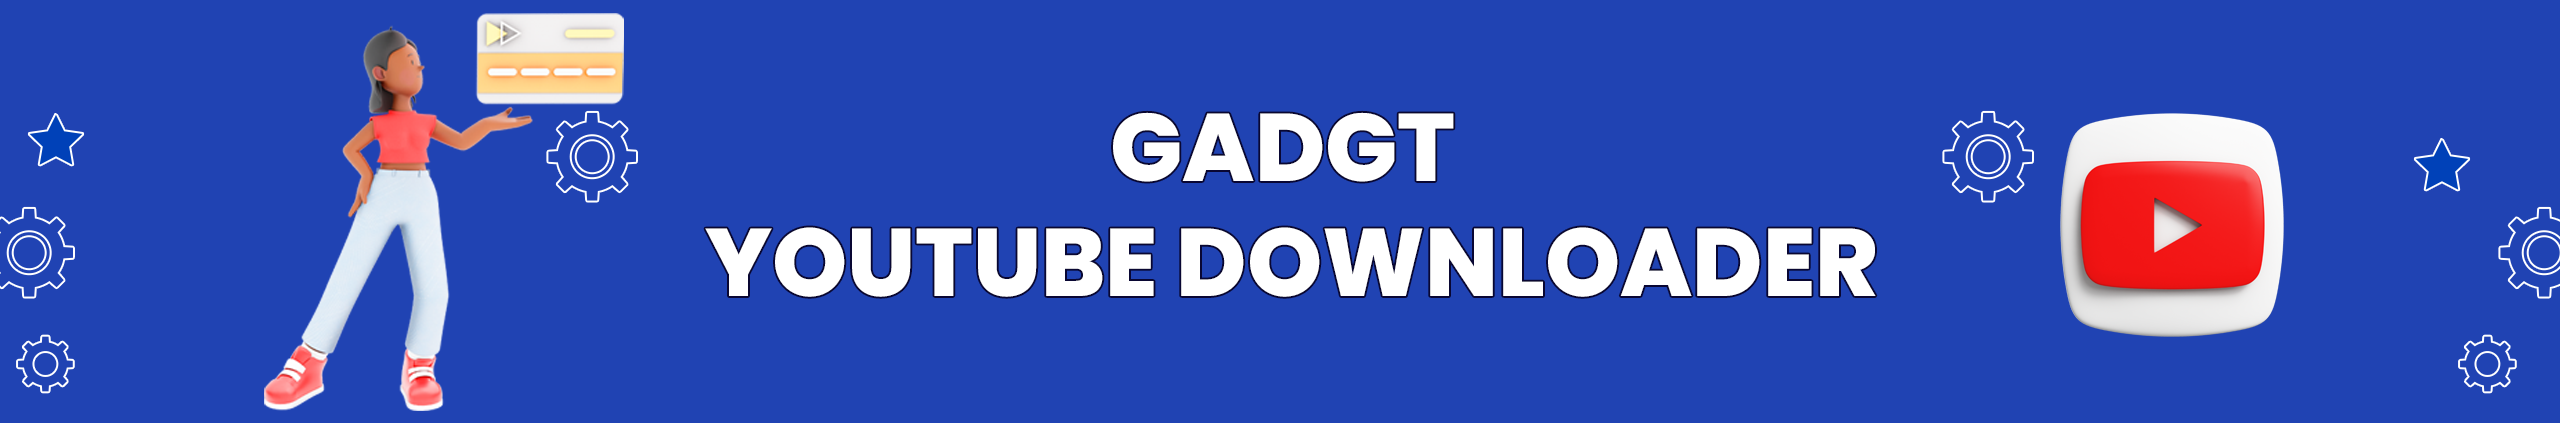 GadyetPx Youtube Downlaoder